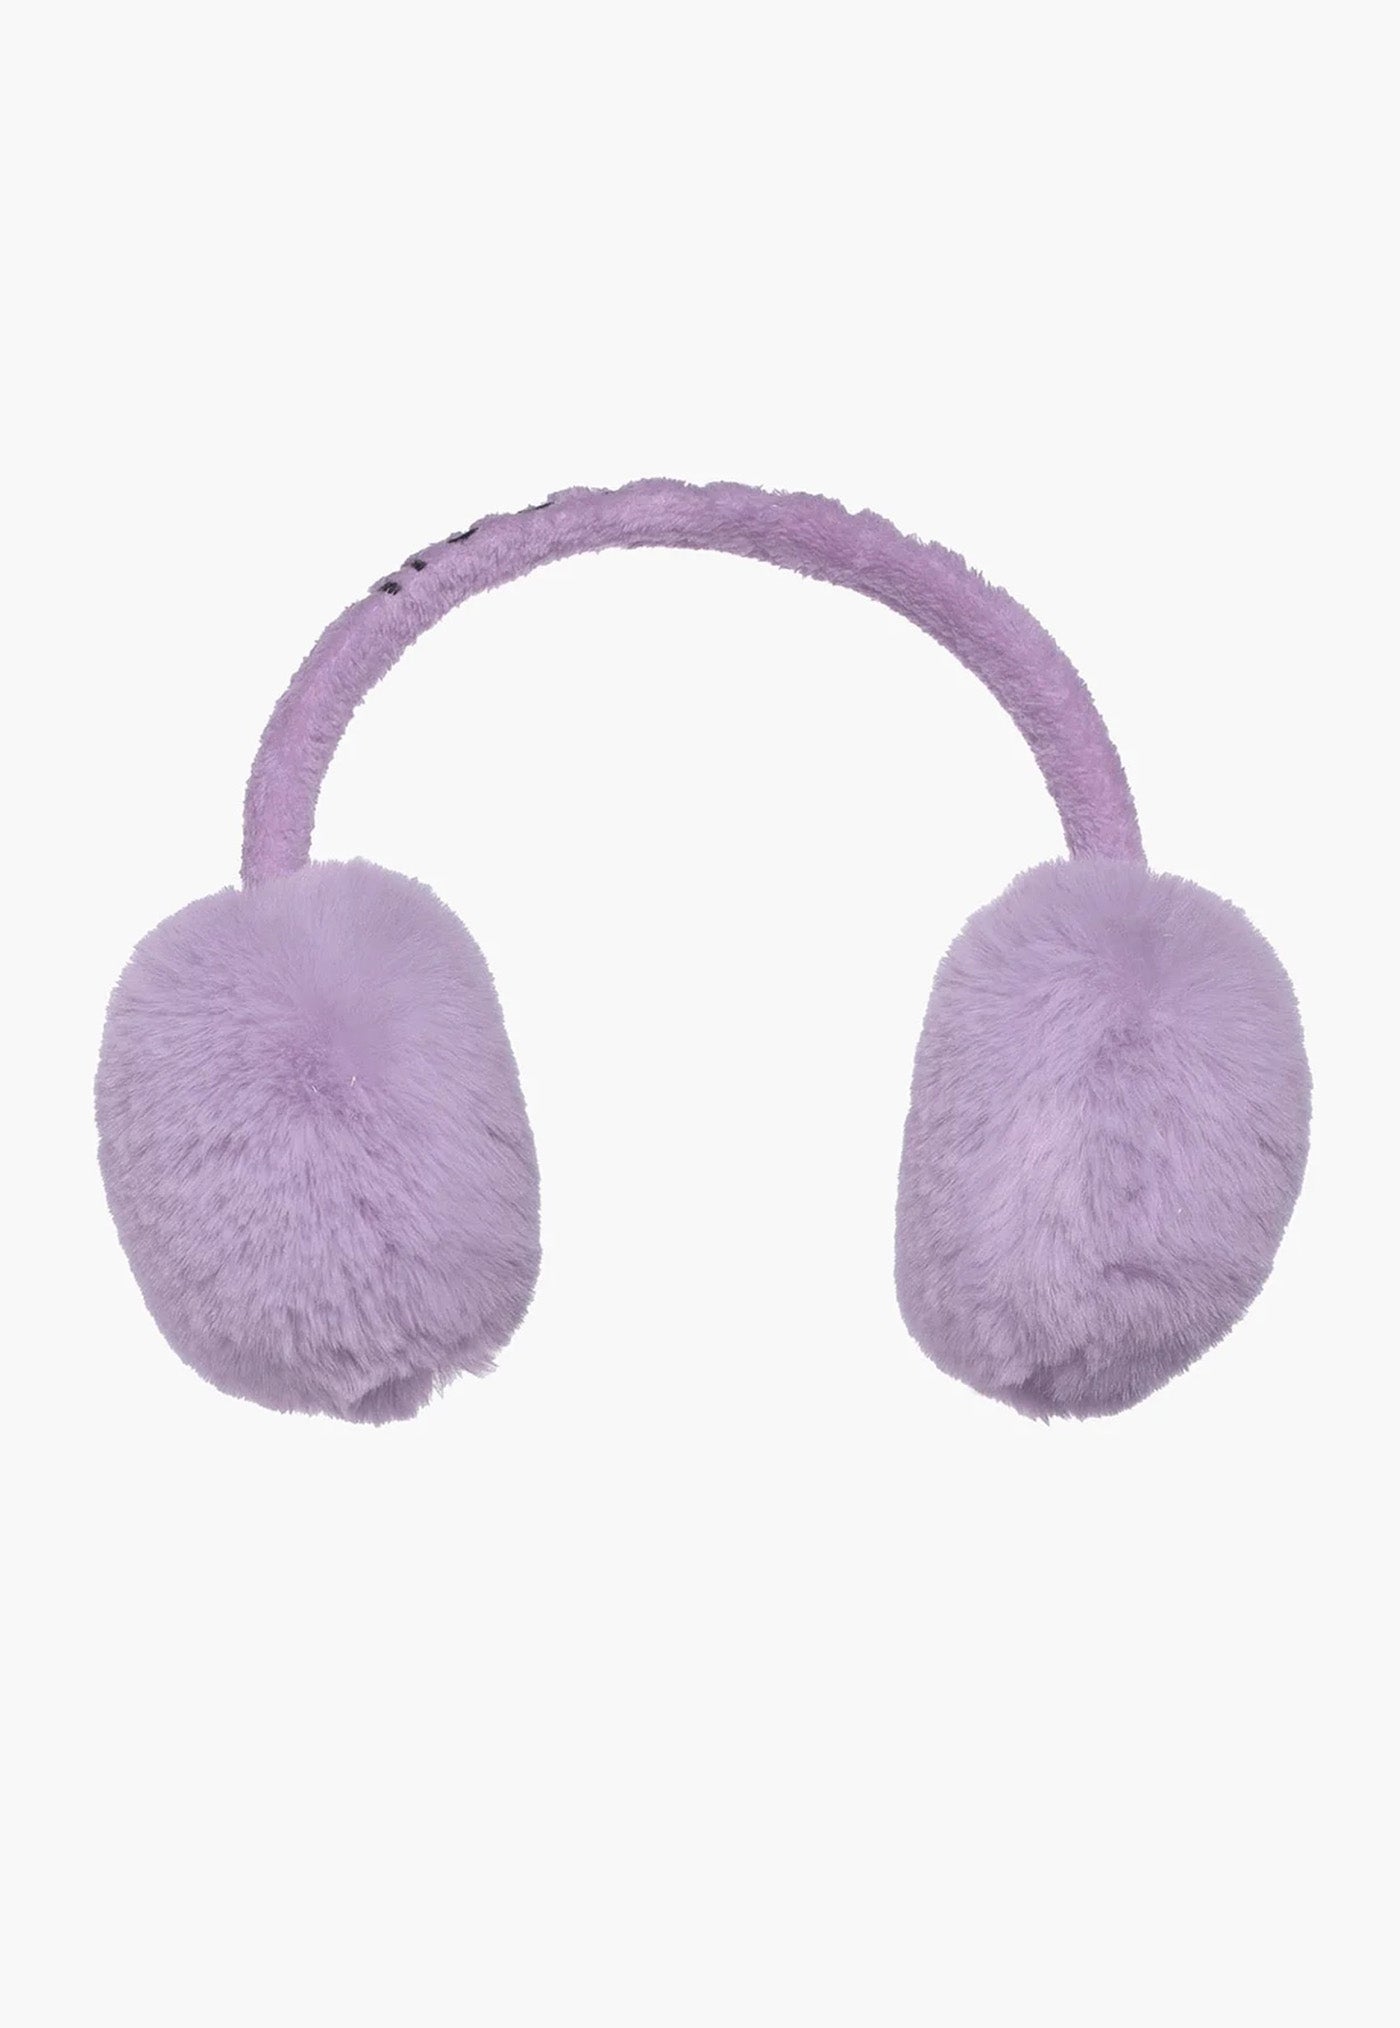 Fluffy Earwarmers Faux Fur - Sweet Lilac sold by Angel Divine